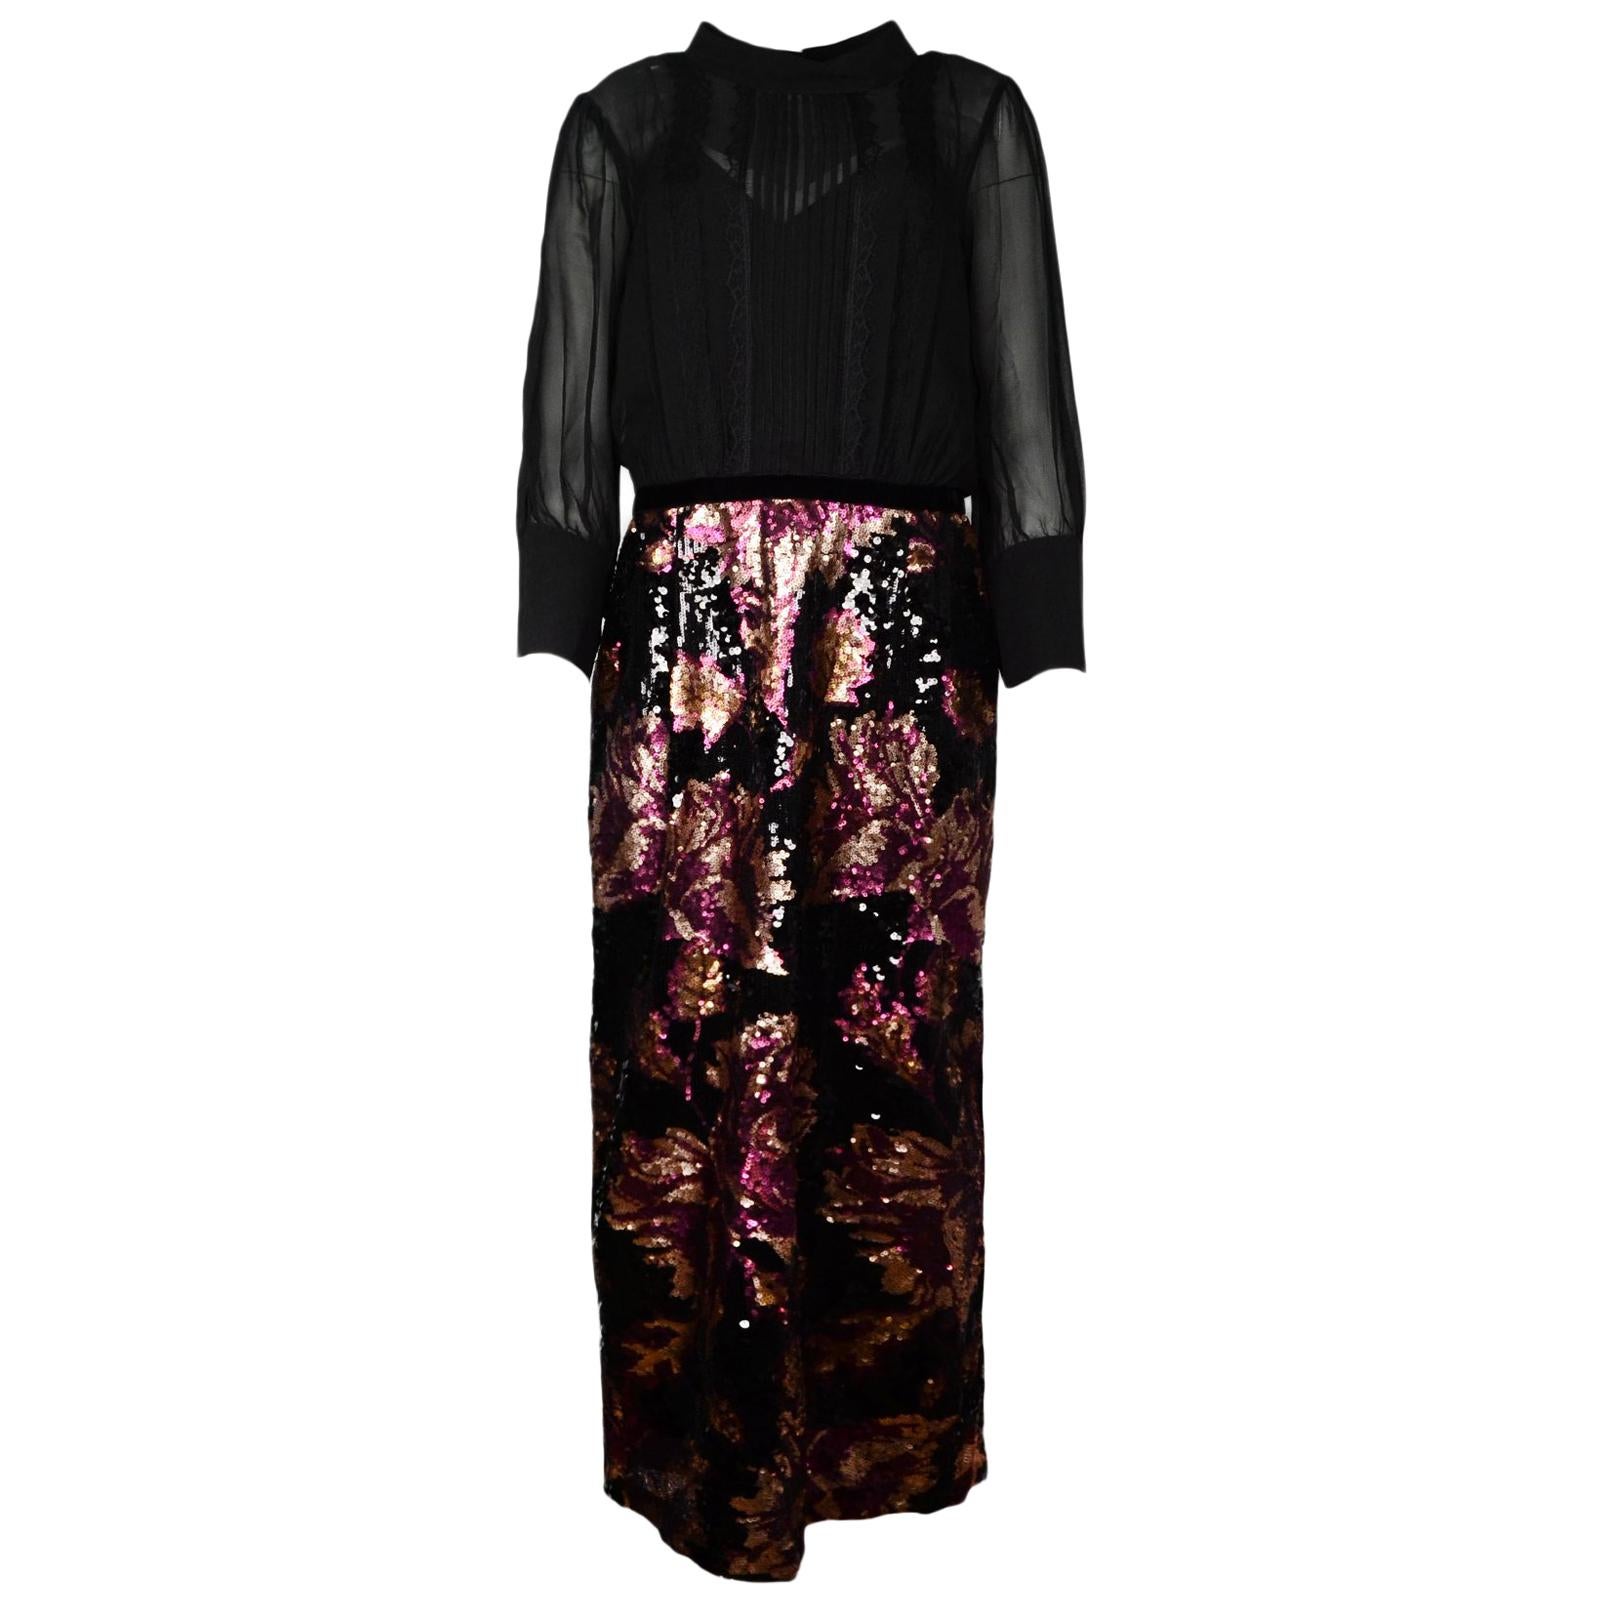 Marchesa Notte NWT Black Column Gown W/ Chiffon Bodice & Sequin Skirtgown Sz 14